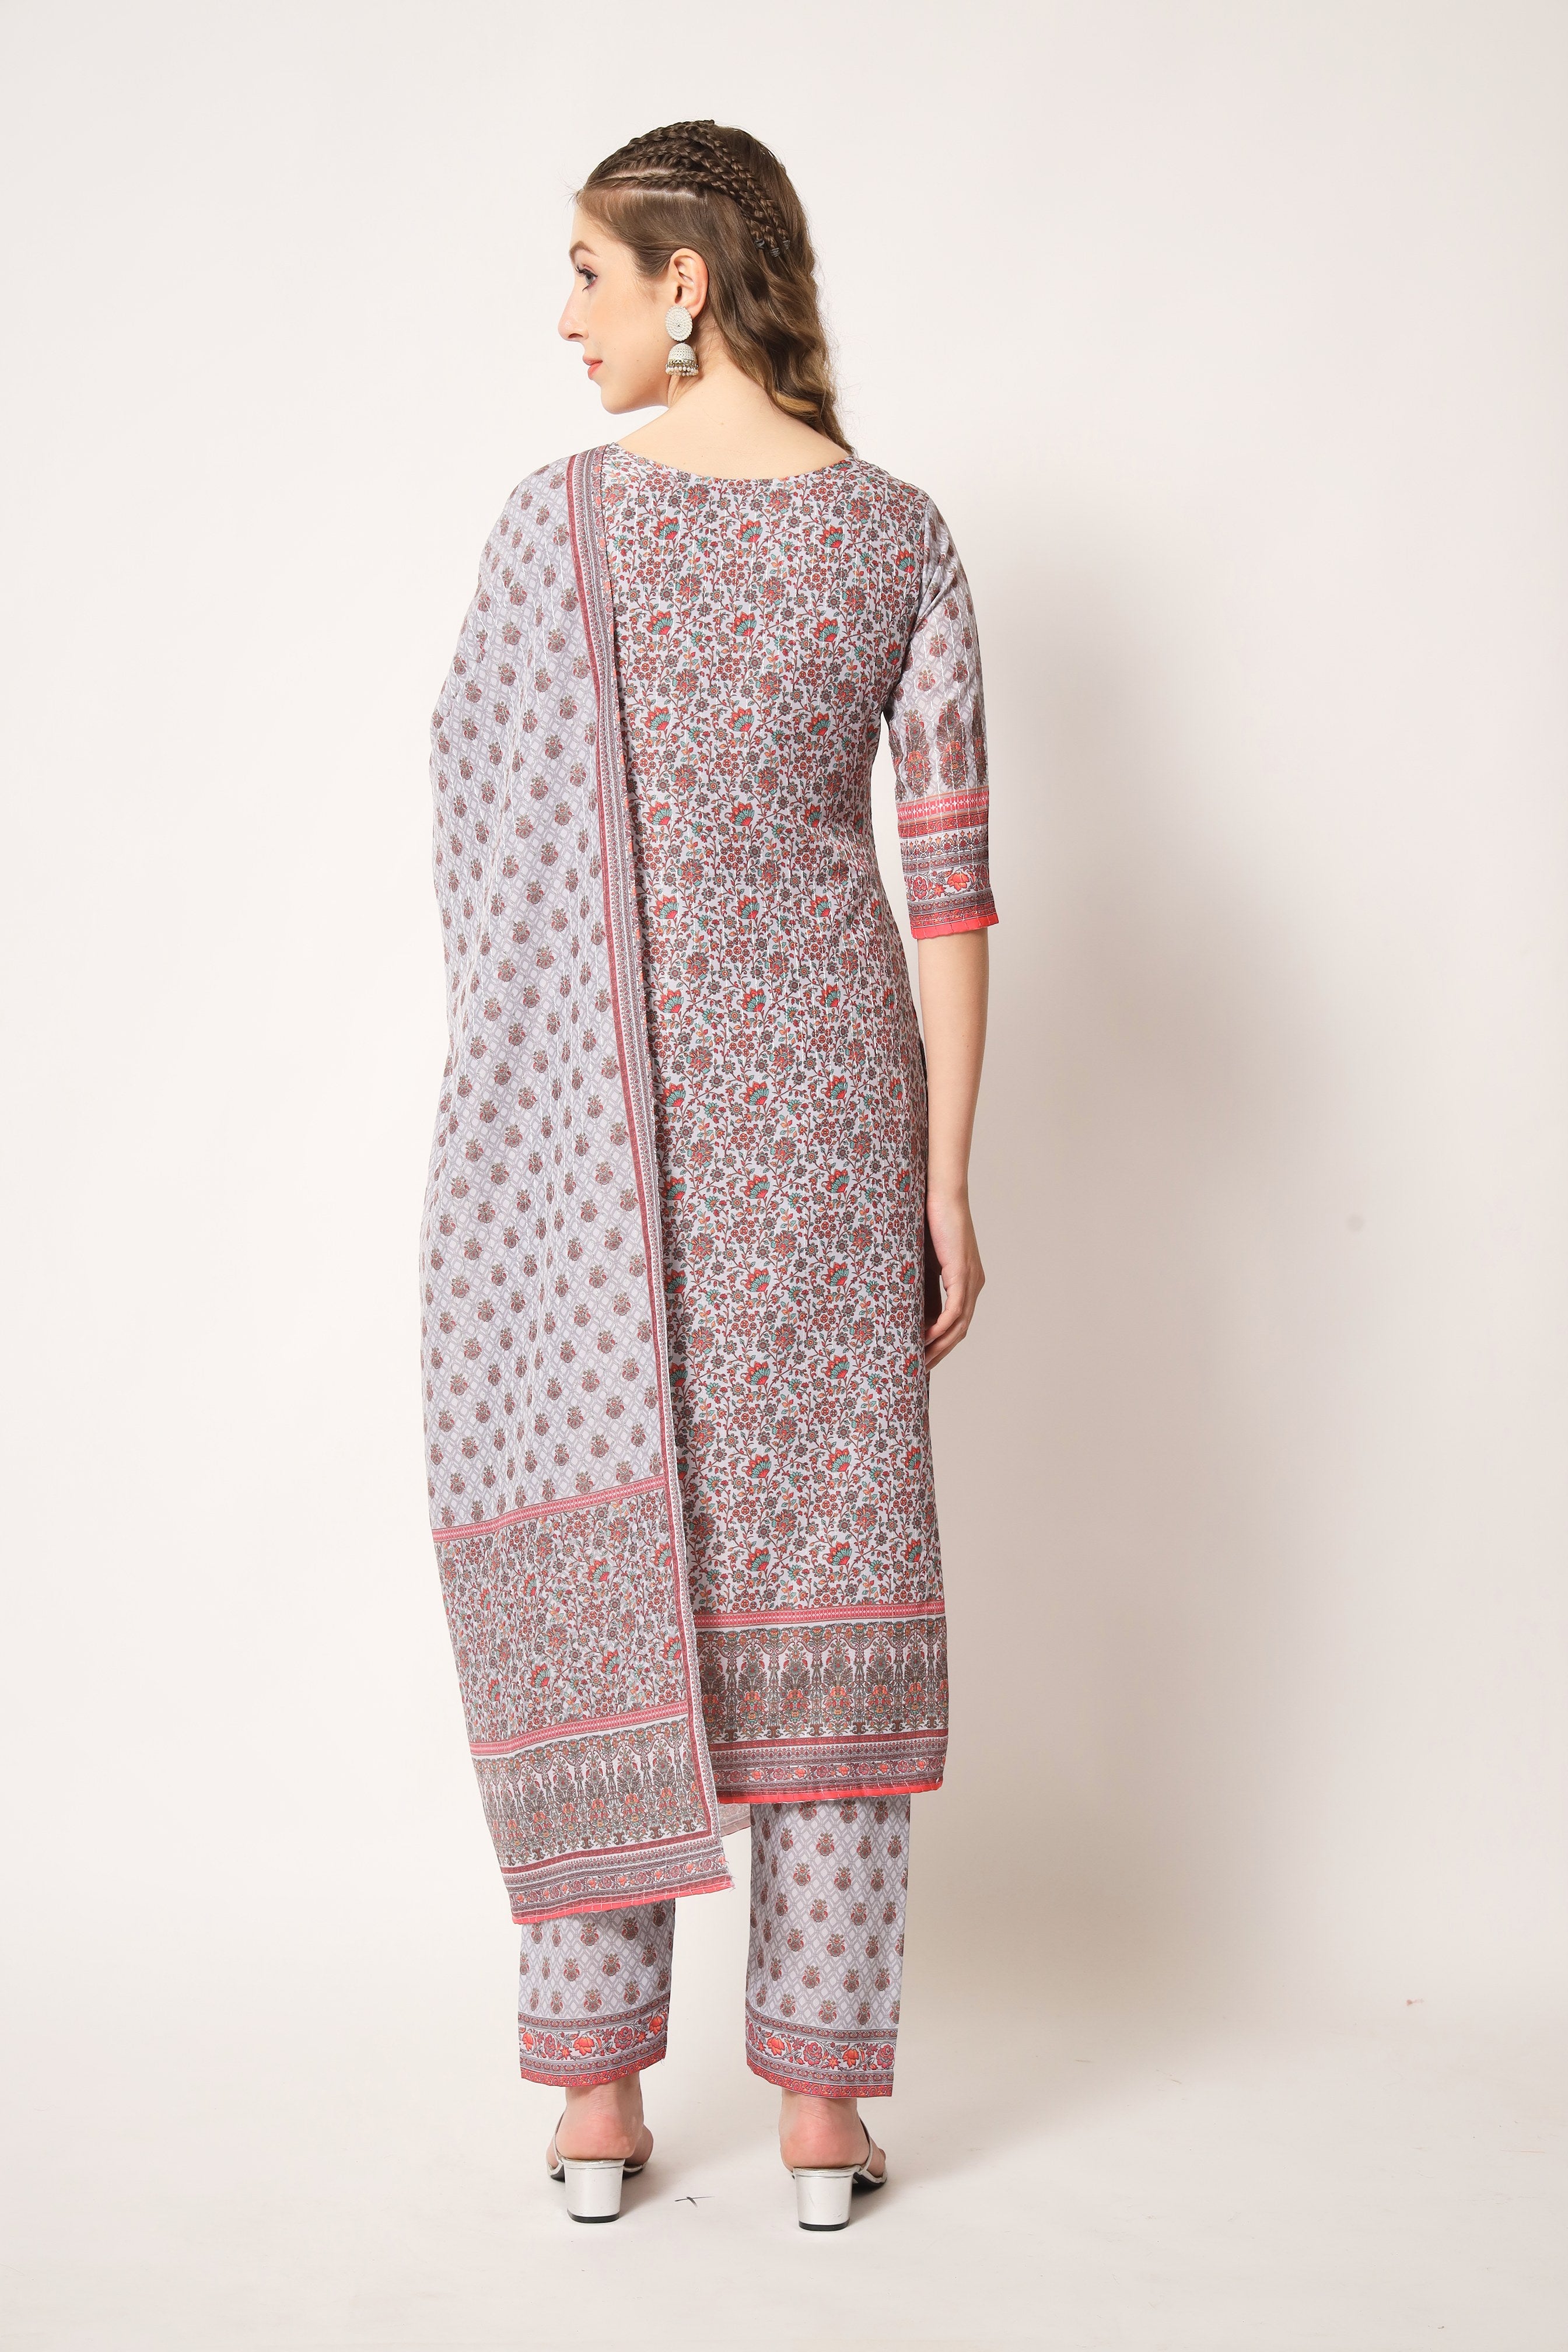 Embroidered Muslin Grey & Red Trendy Salwar Kameez For Women